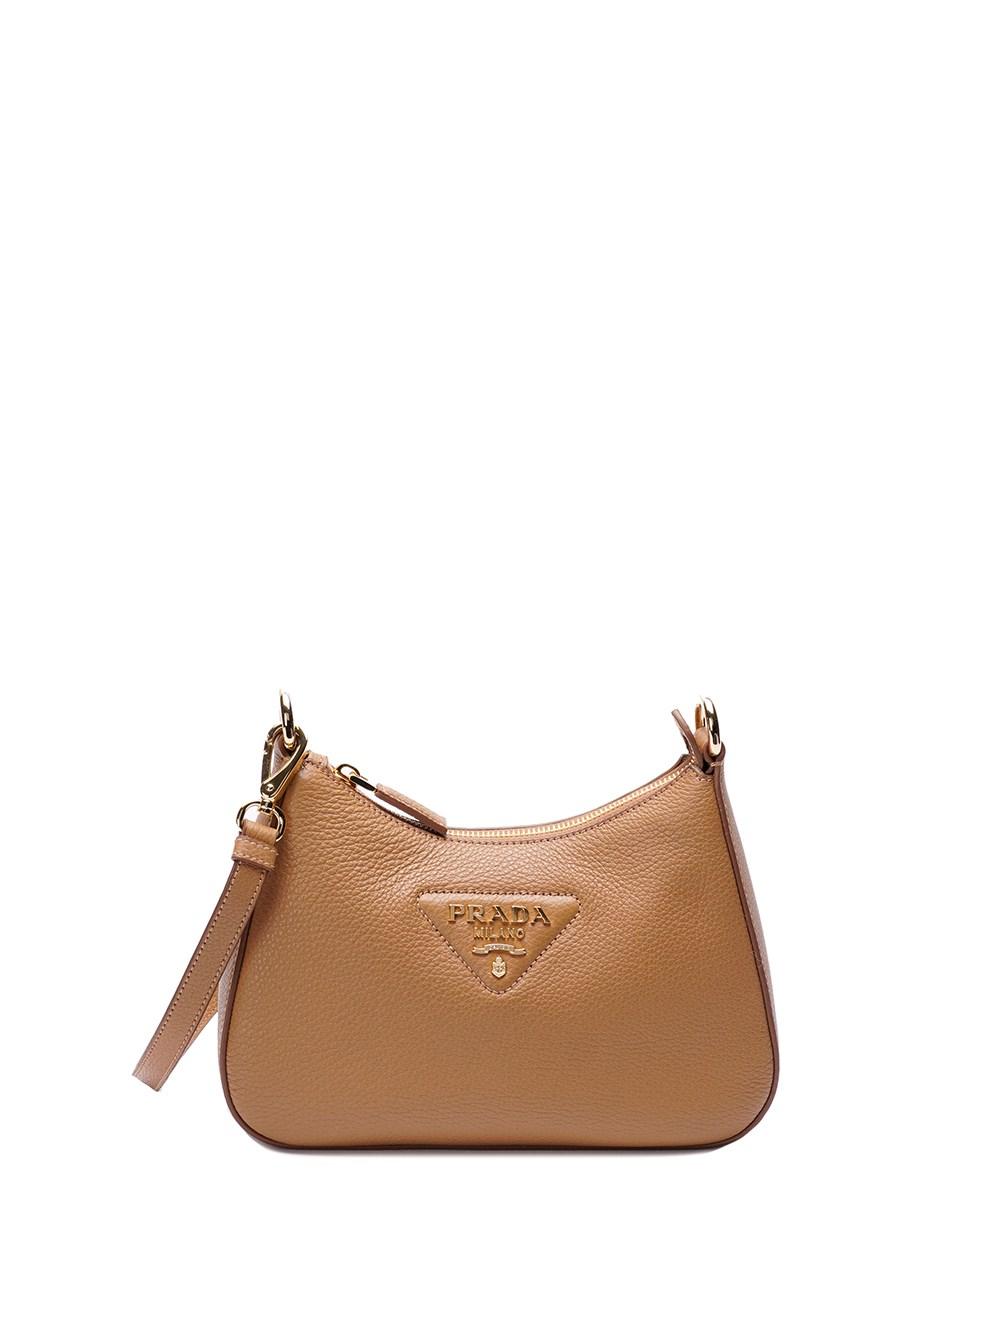 Prada Leather Shoulder Bag in Brown | Lyst UK